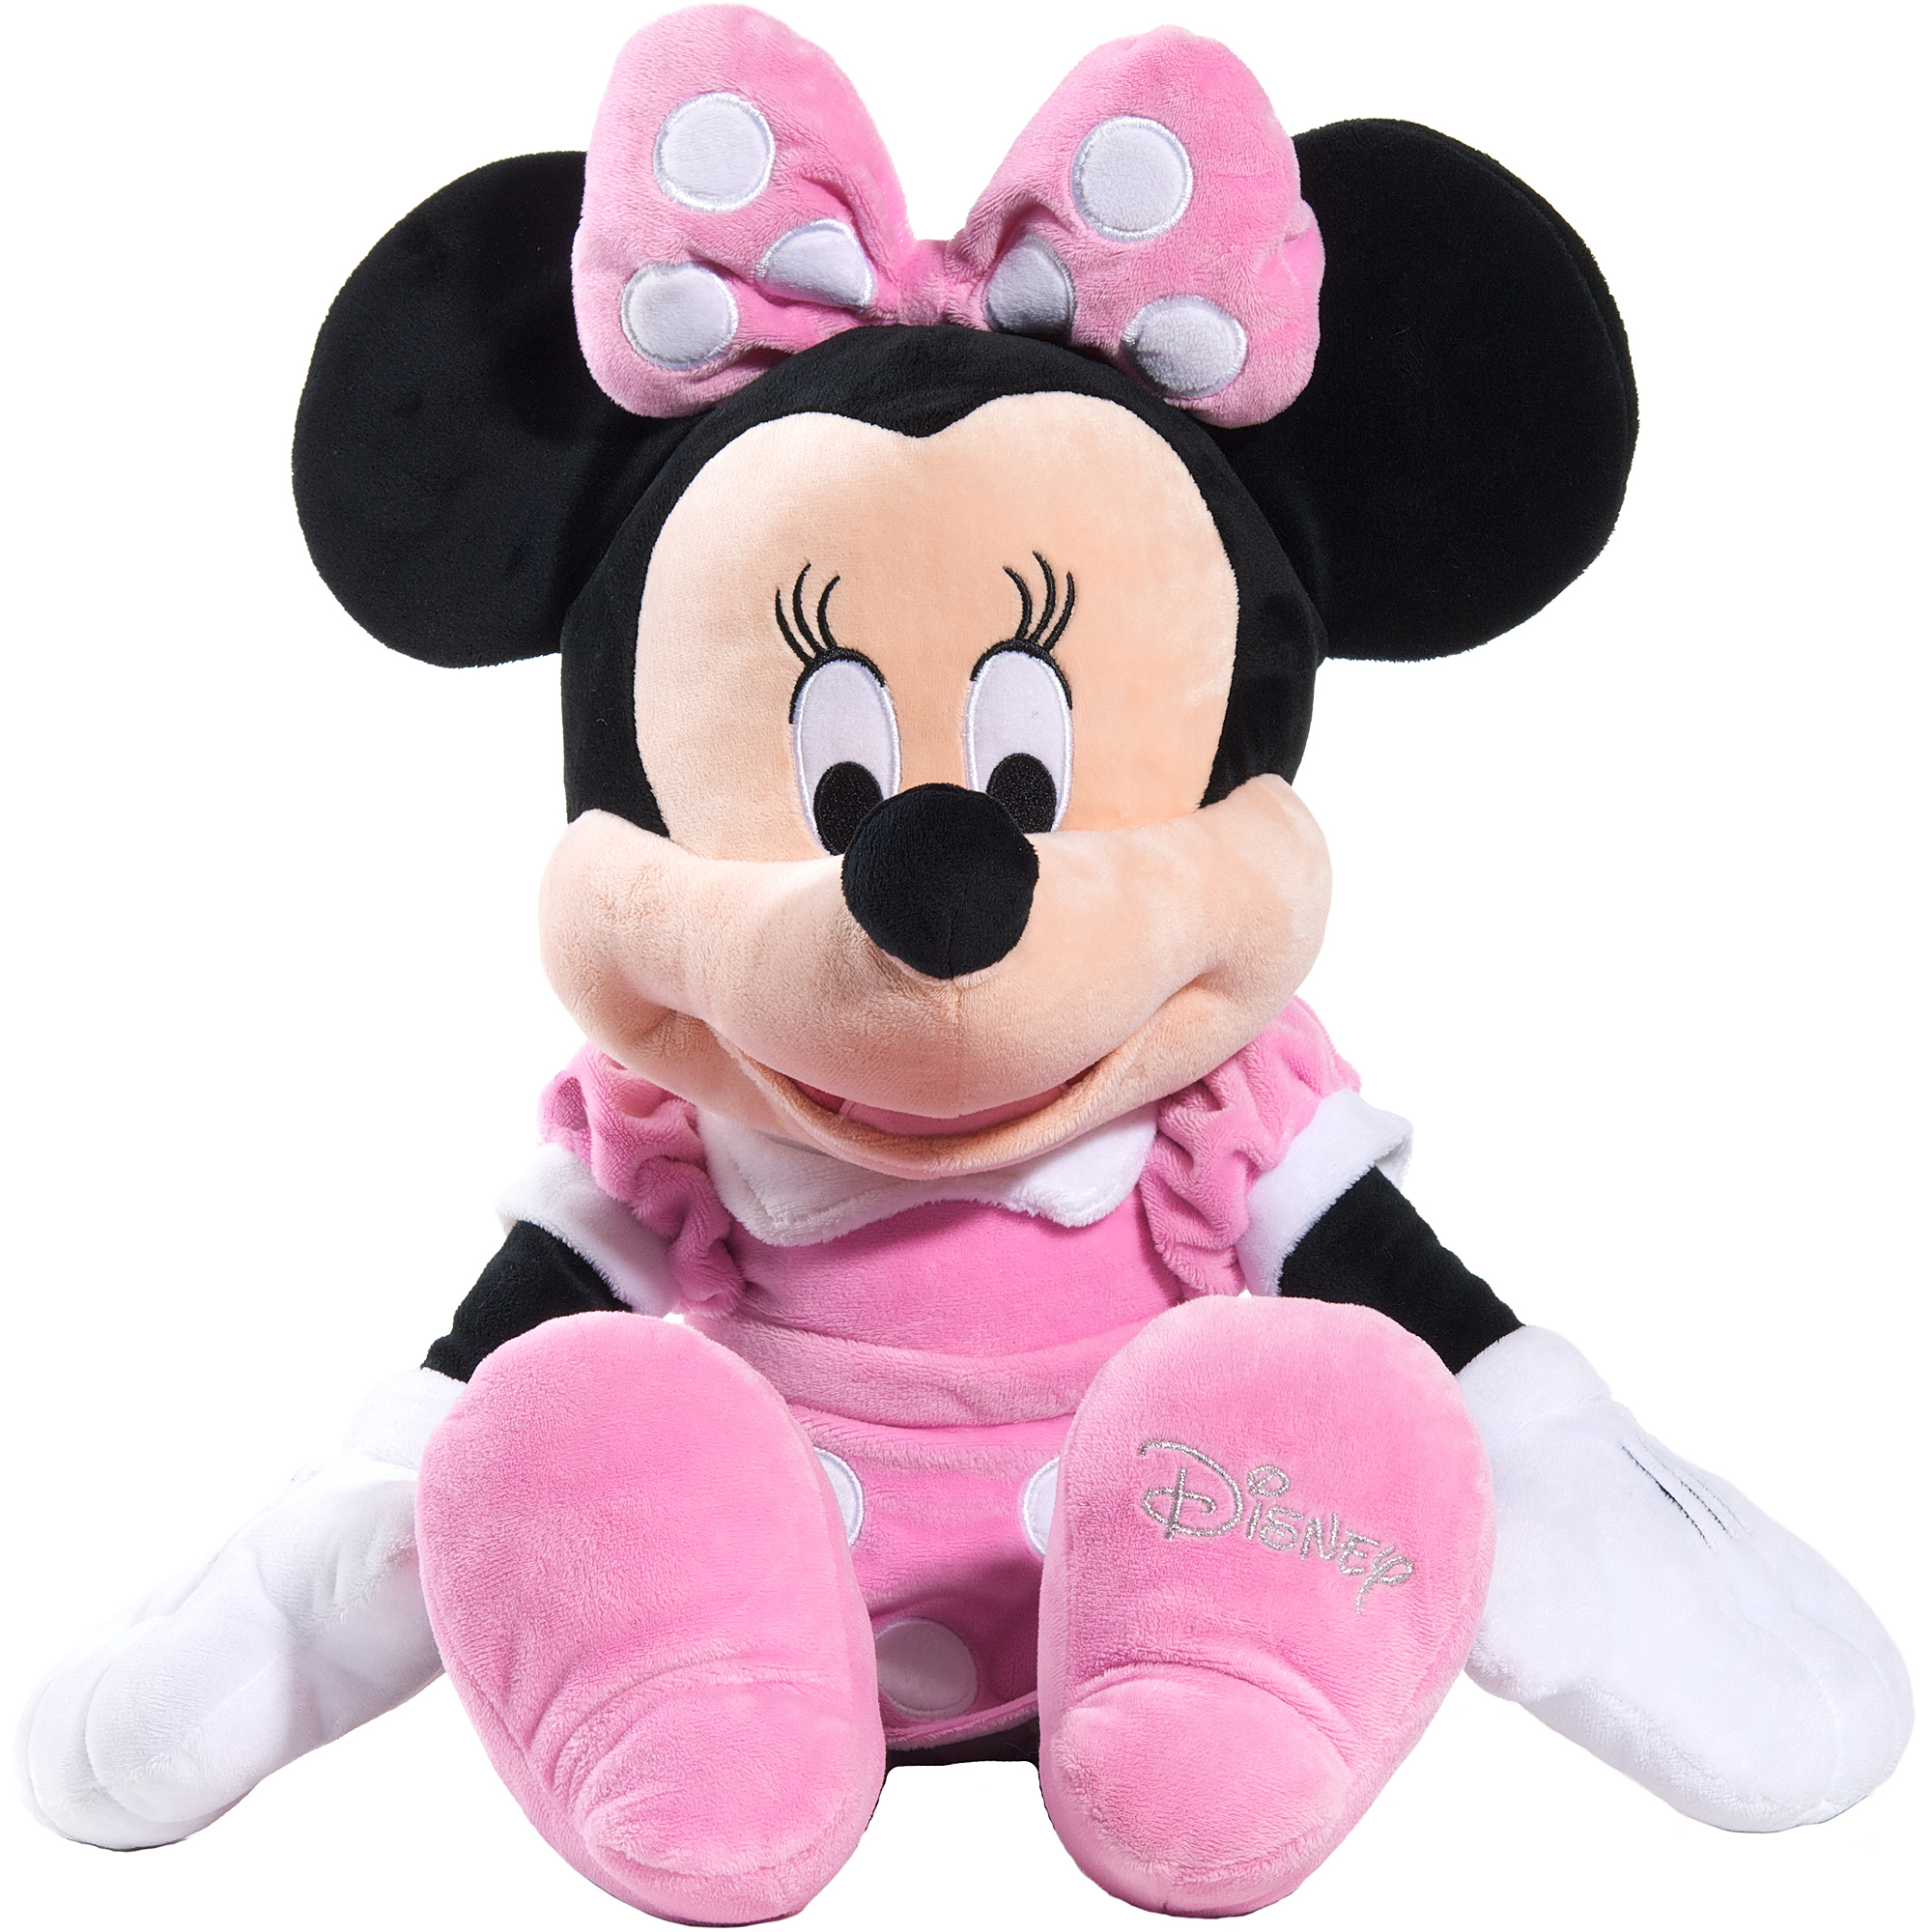 Disney Classic Minnie Large Plush - image 1 of 2